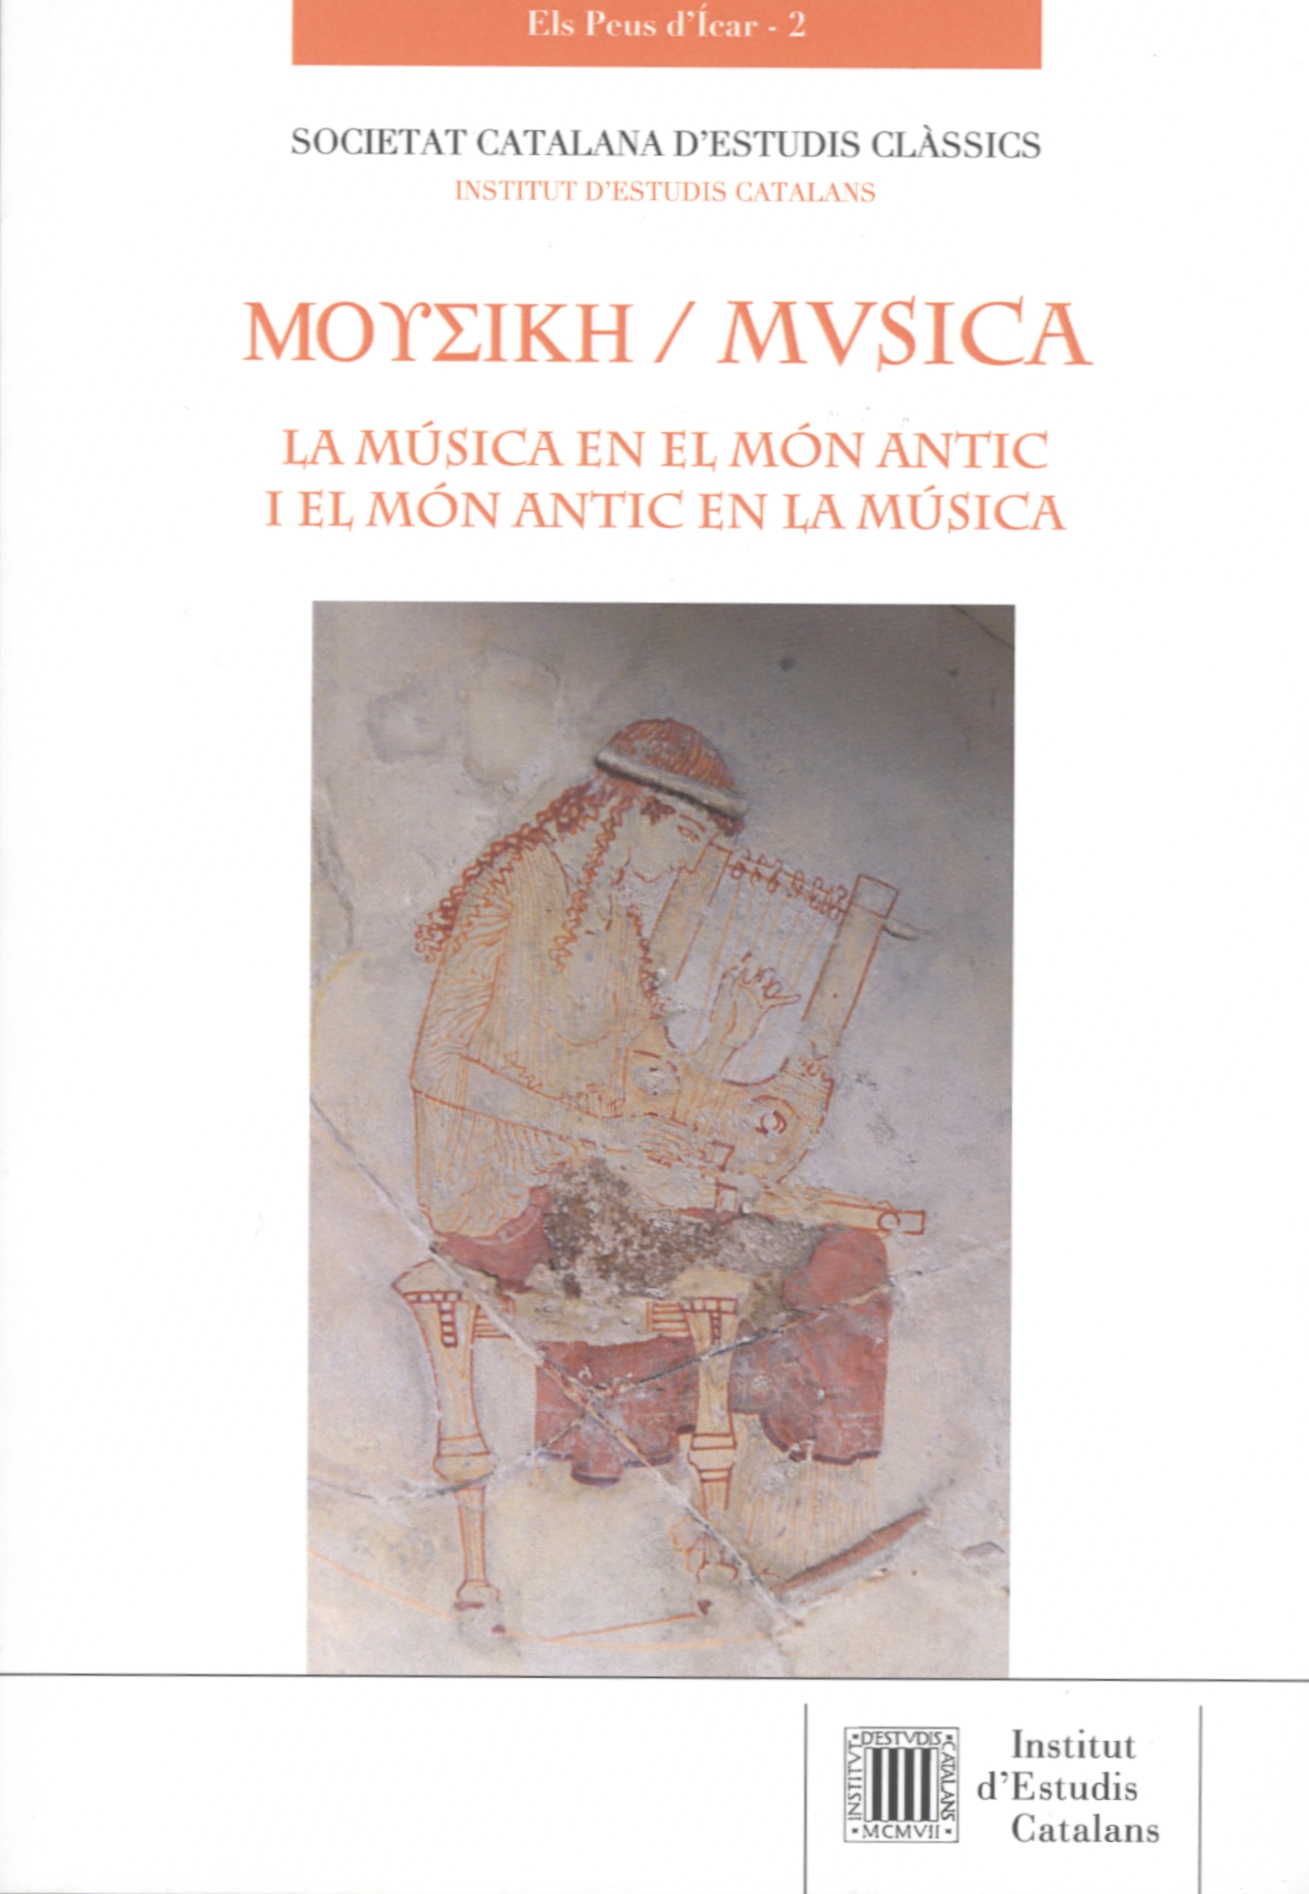 Imagen de portada del libro Moysikh-mvsica